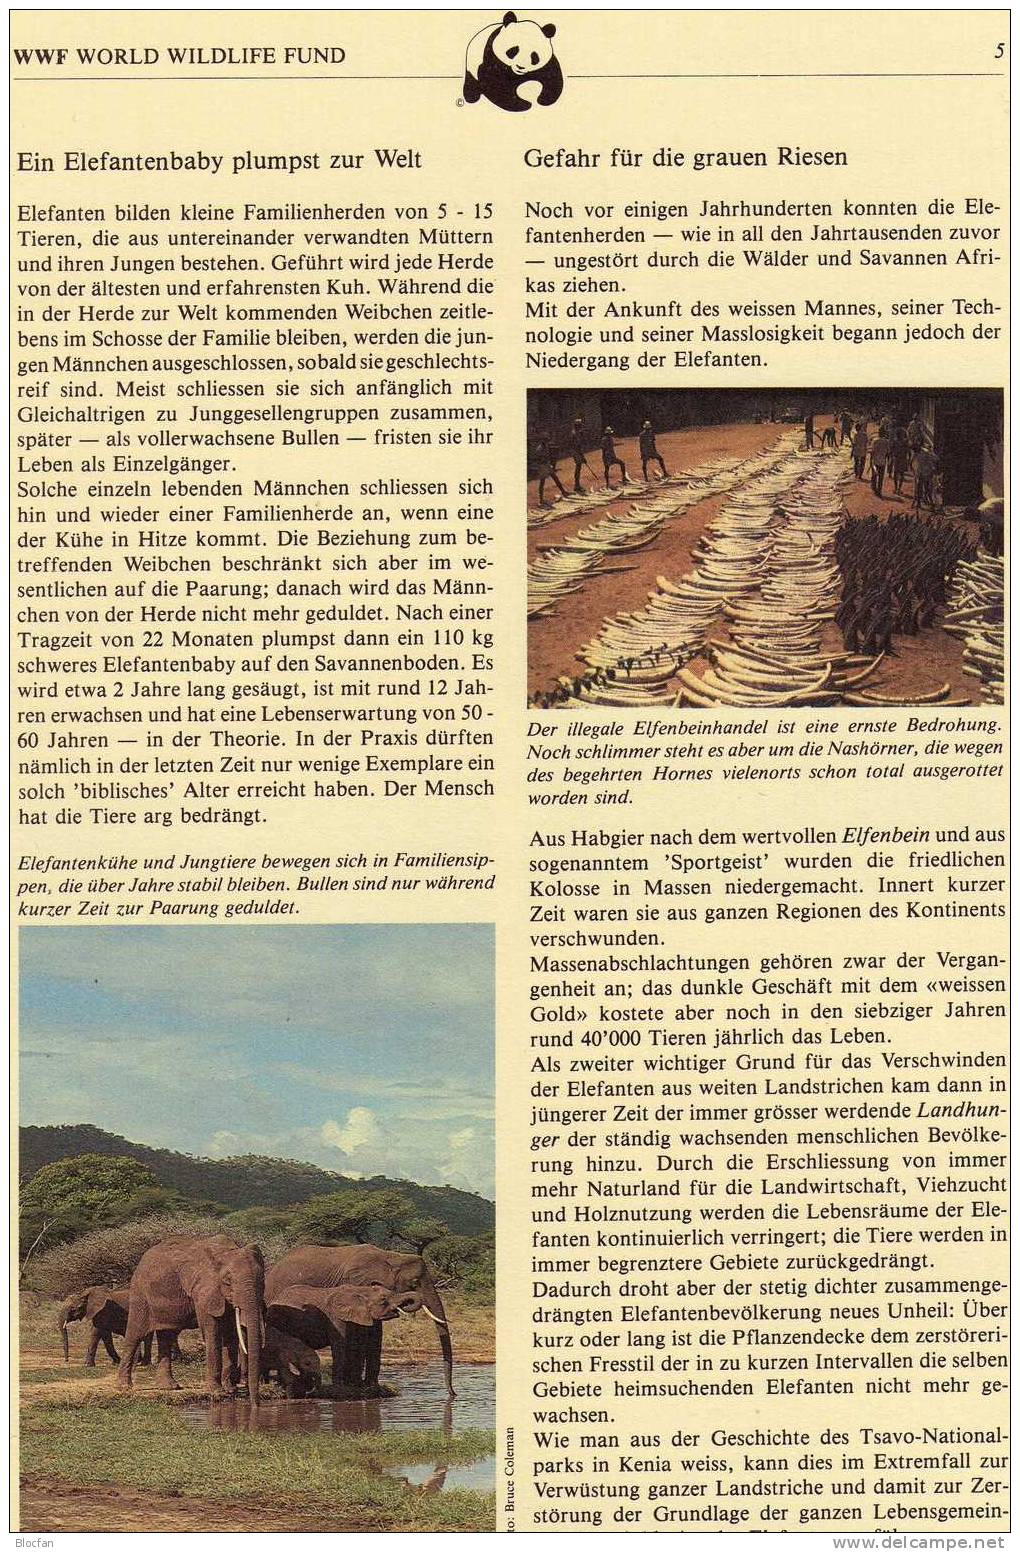 WWF-Set 4 Uganda 361/4 4xMKt. 20€ Elefanten 1983 Mit Naturschutz-Dokumentation - Uganda (1962-...)